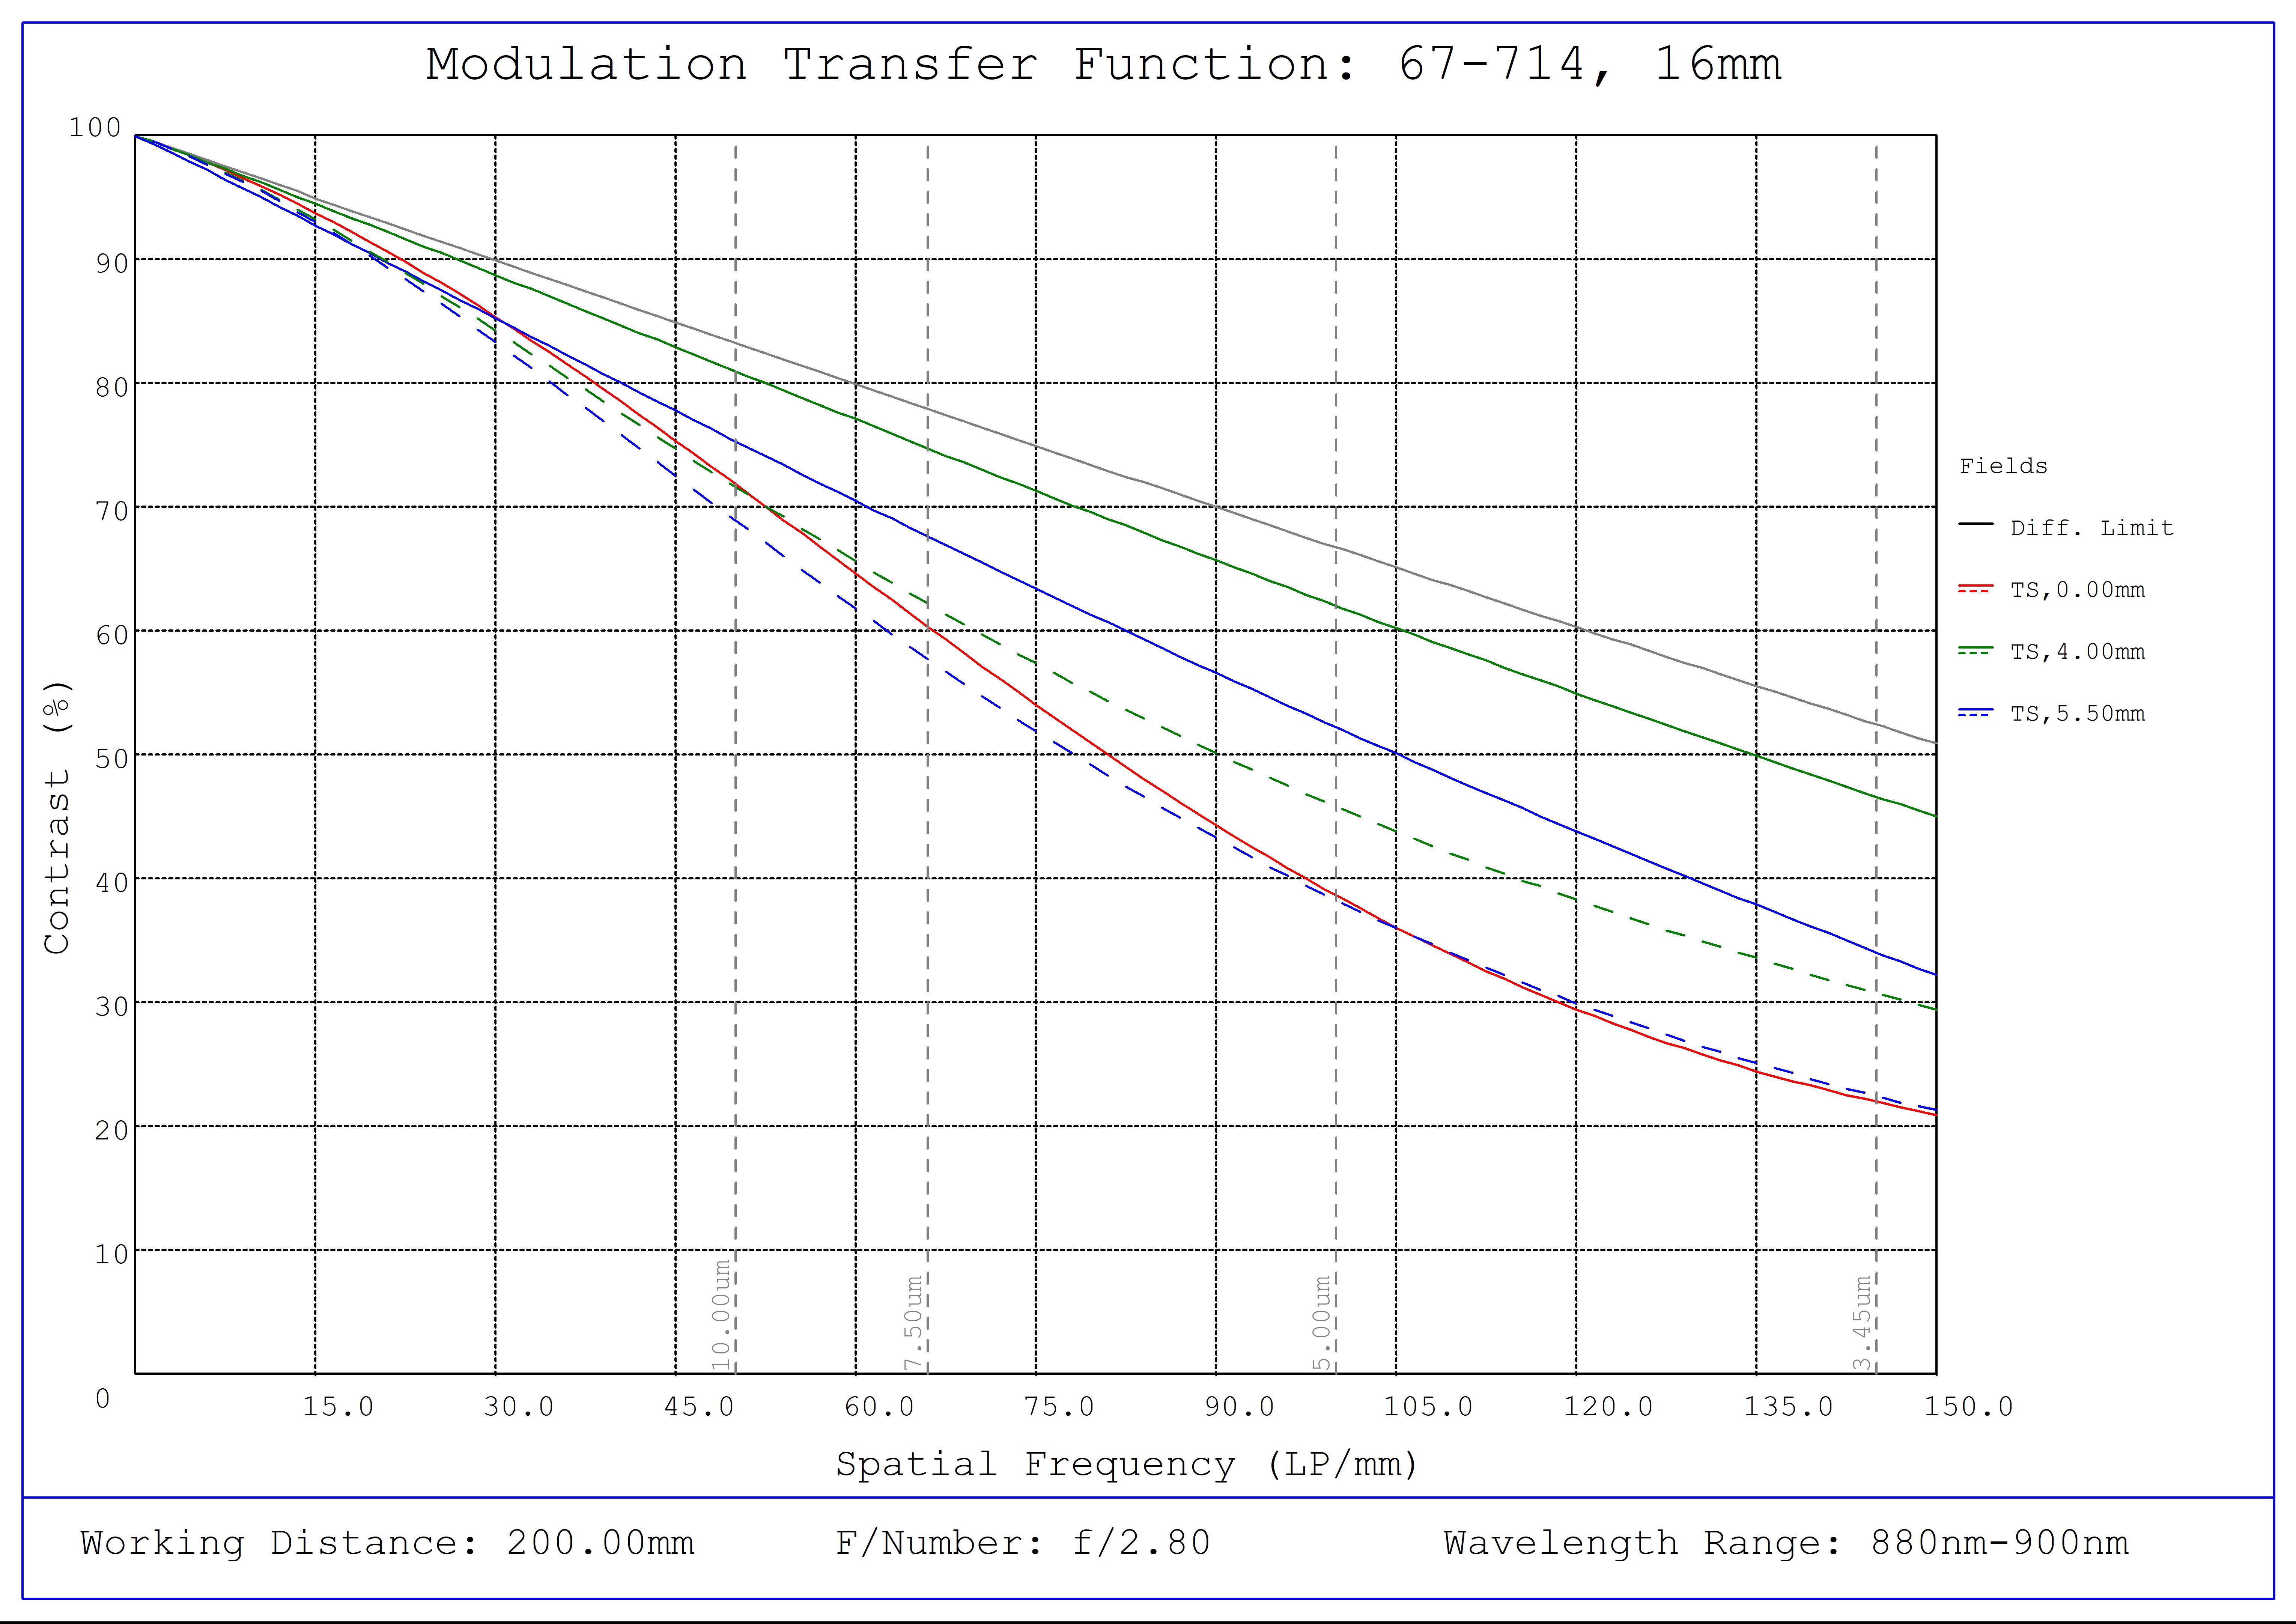 #67-714, 16mm C VIS-NIR Series Fixed Focal Length Lens, Modulated Transfer Function (MTF) Plot (NIR), 200mm Working Distance, f2.8